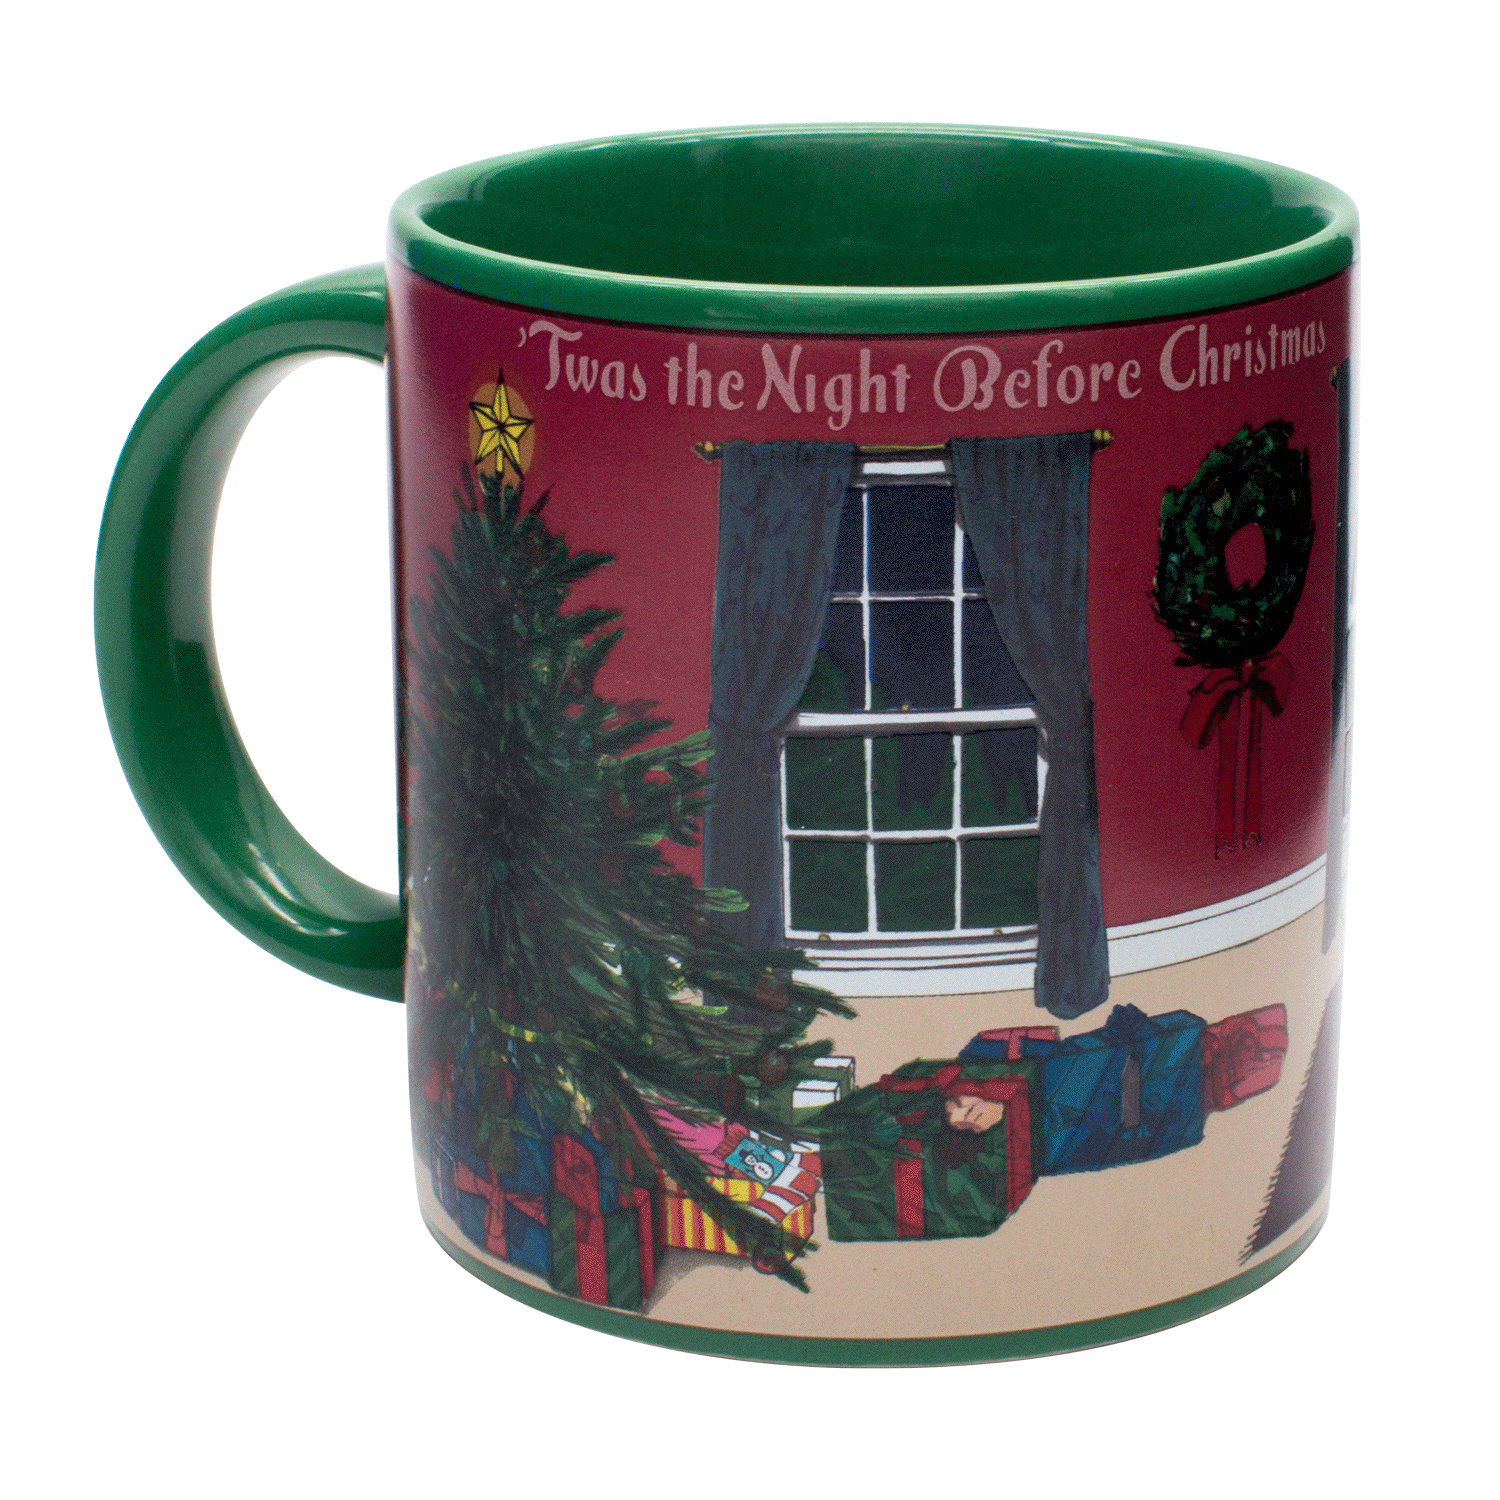 "Twas the Night Before Christmas Mug